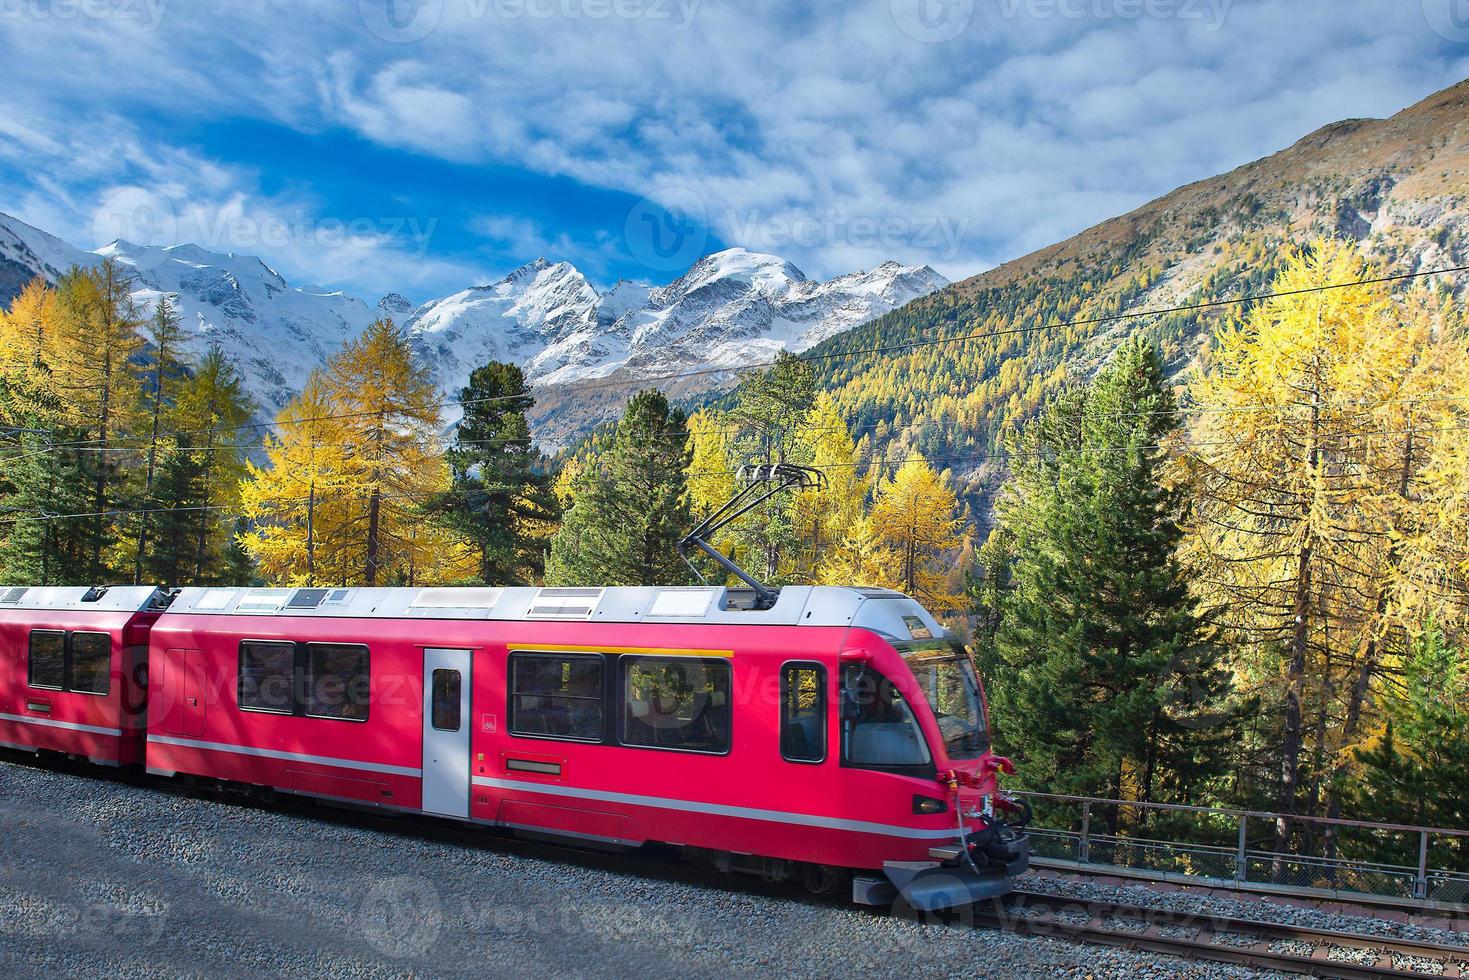 swiss mountain train bernina express cruzou os alpes no outono foto